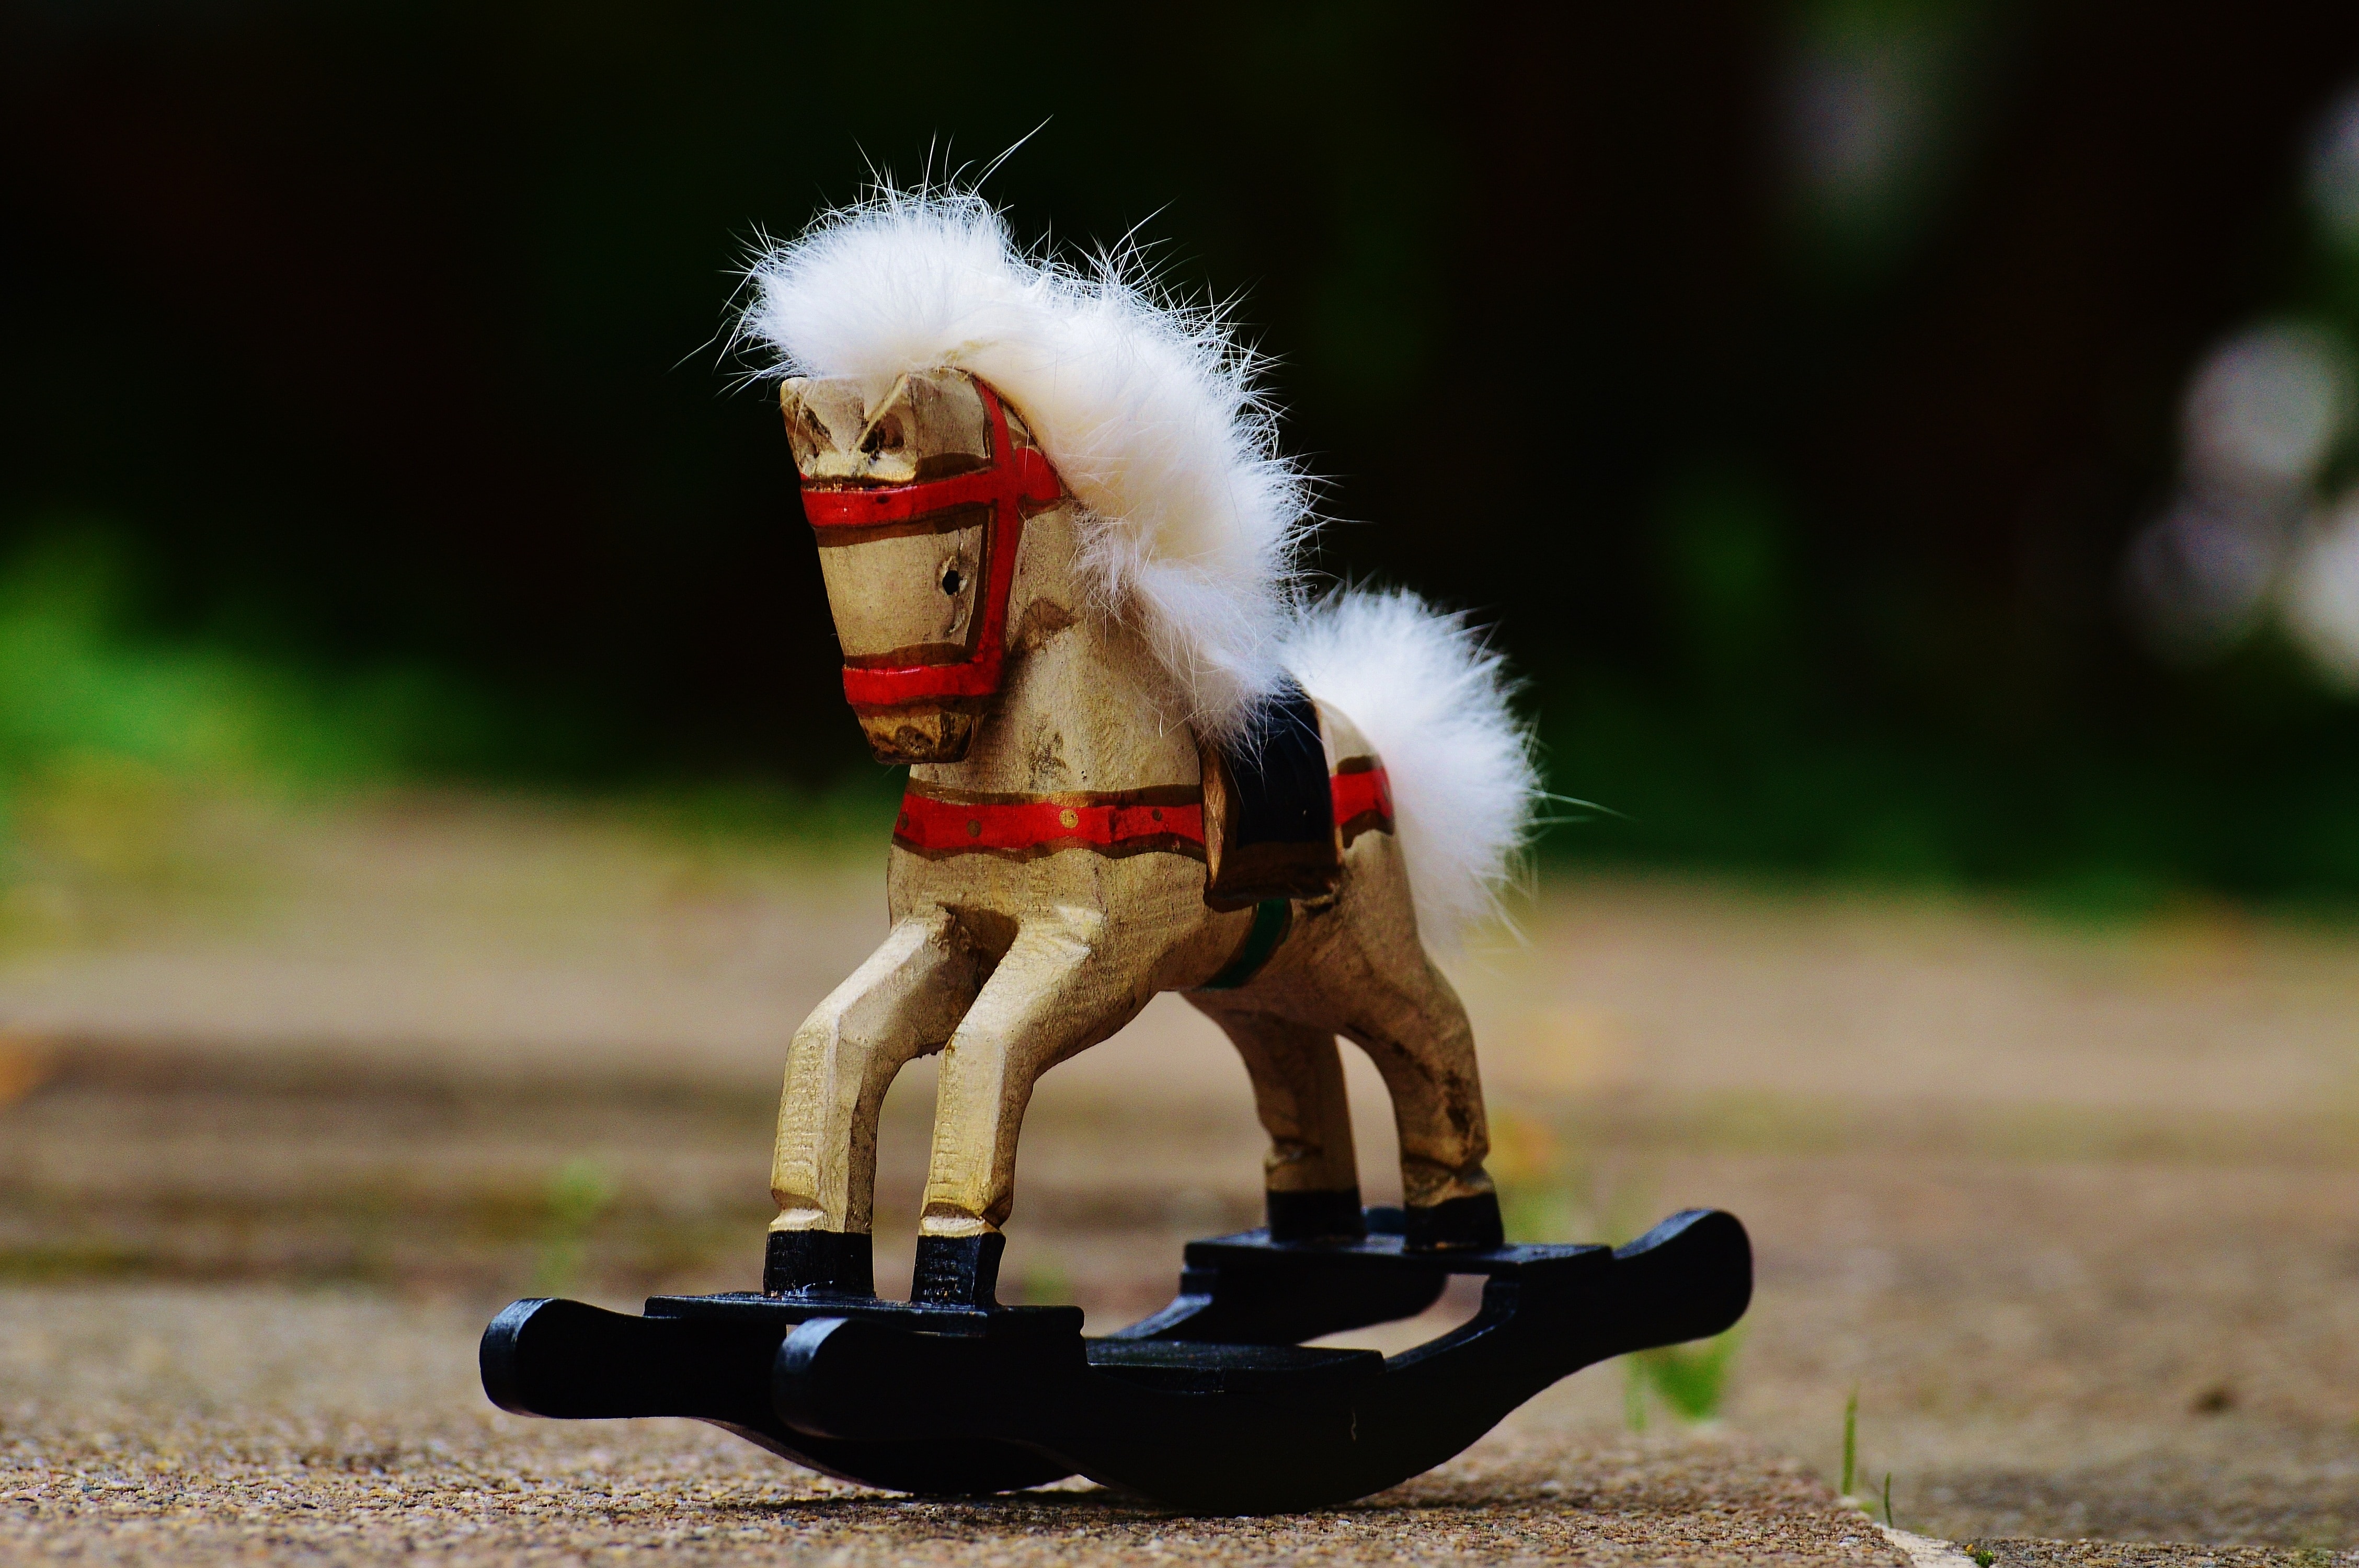 horse toy online